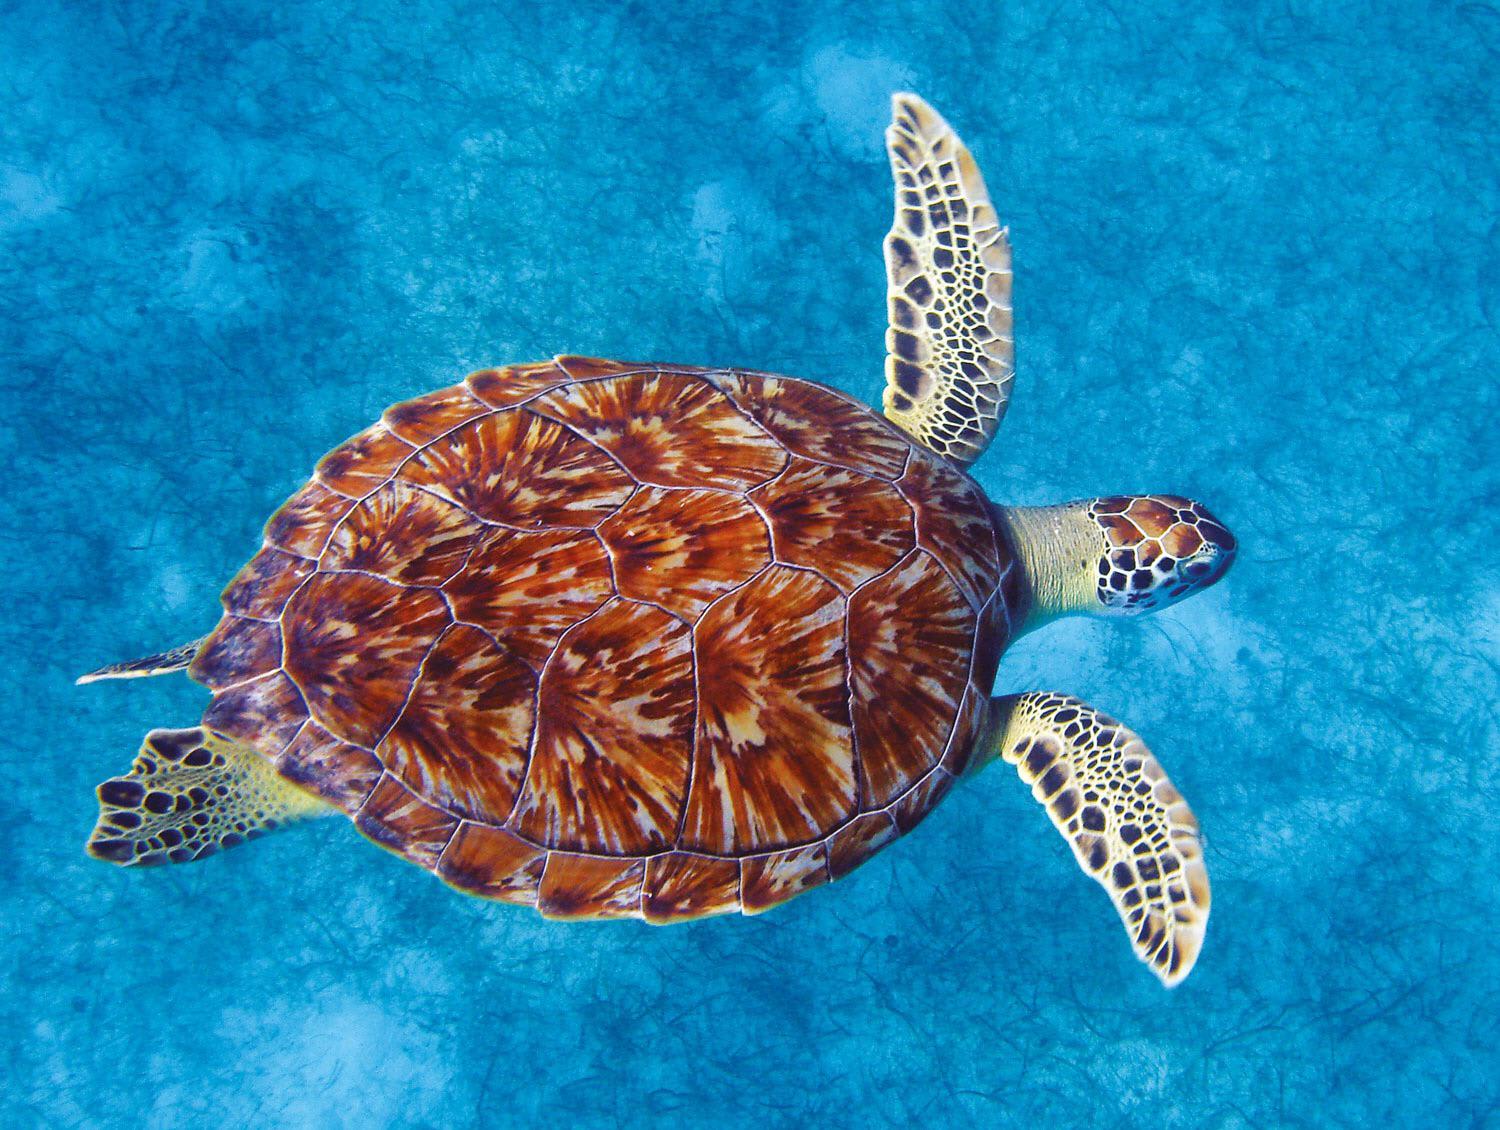 Sea Turtle’s shell displaying a beautiful set of patterns